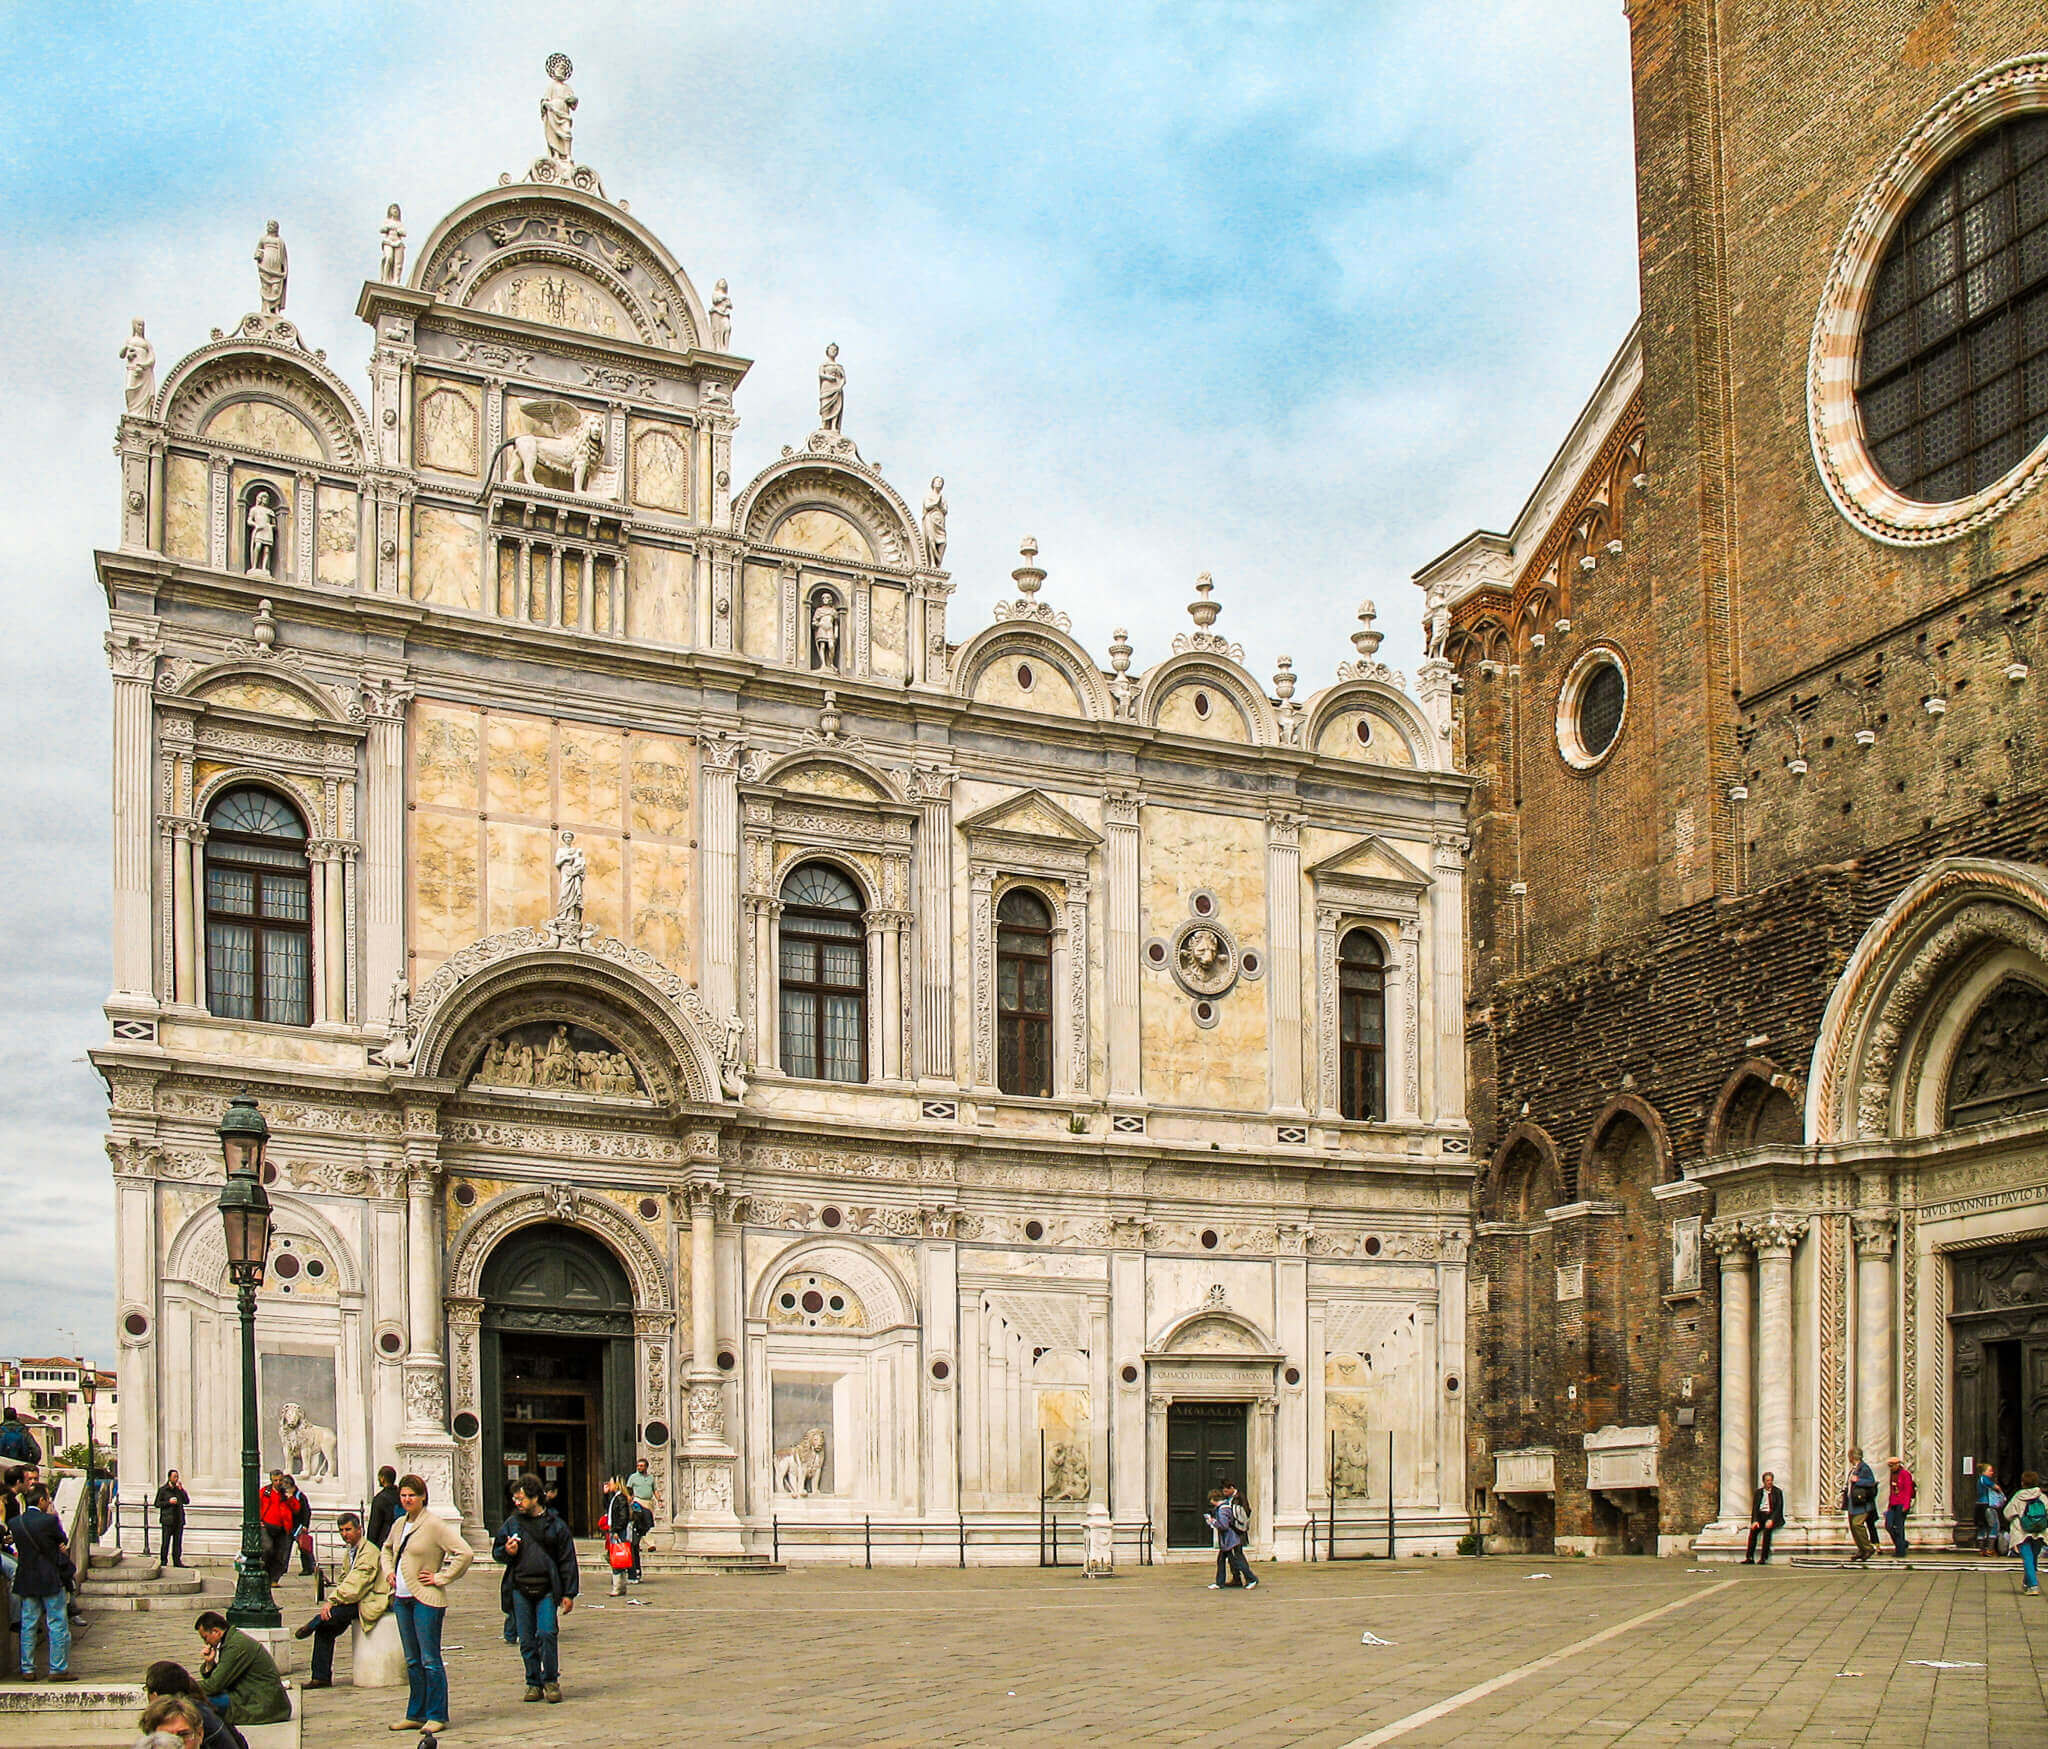 The Renaissance facade of the Ospedale, the civic hospital beside the Santi Giovanni e Paolo basilica